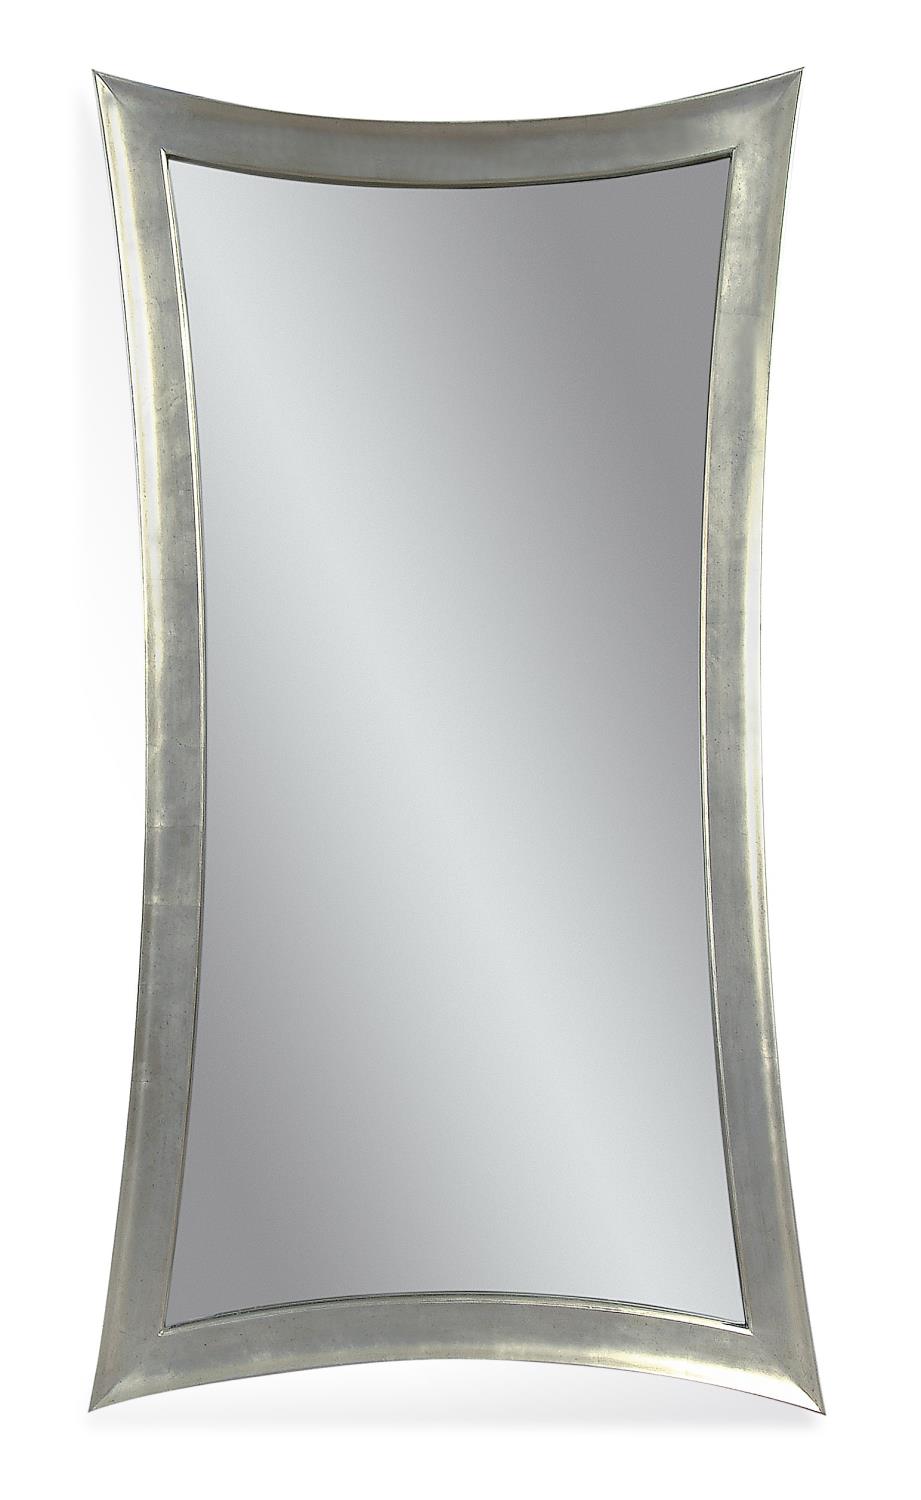 Bassett Mirror Company Bassett Mirror Hour-Glass Shaped Leaner in Silver Leaf Finish M1718EC